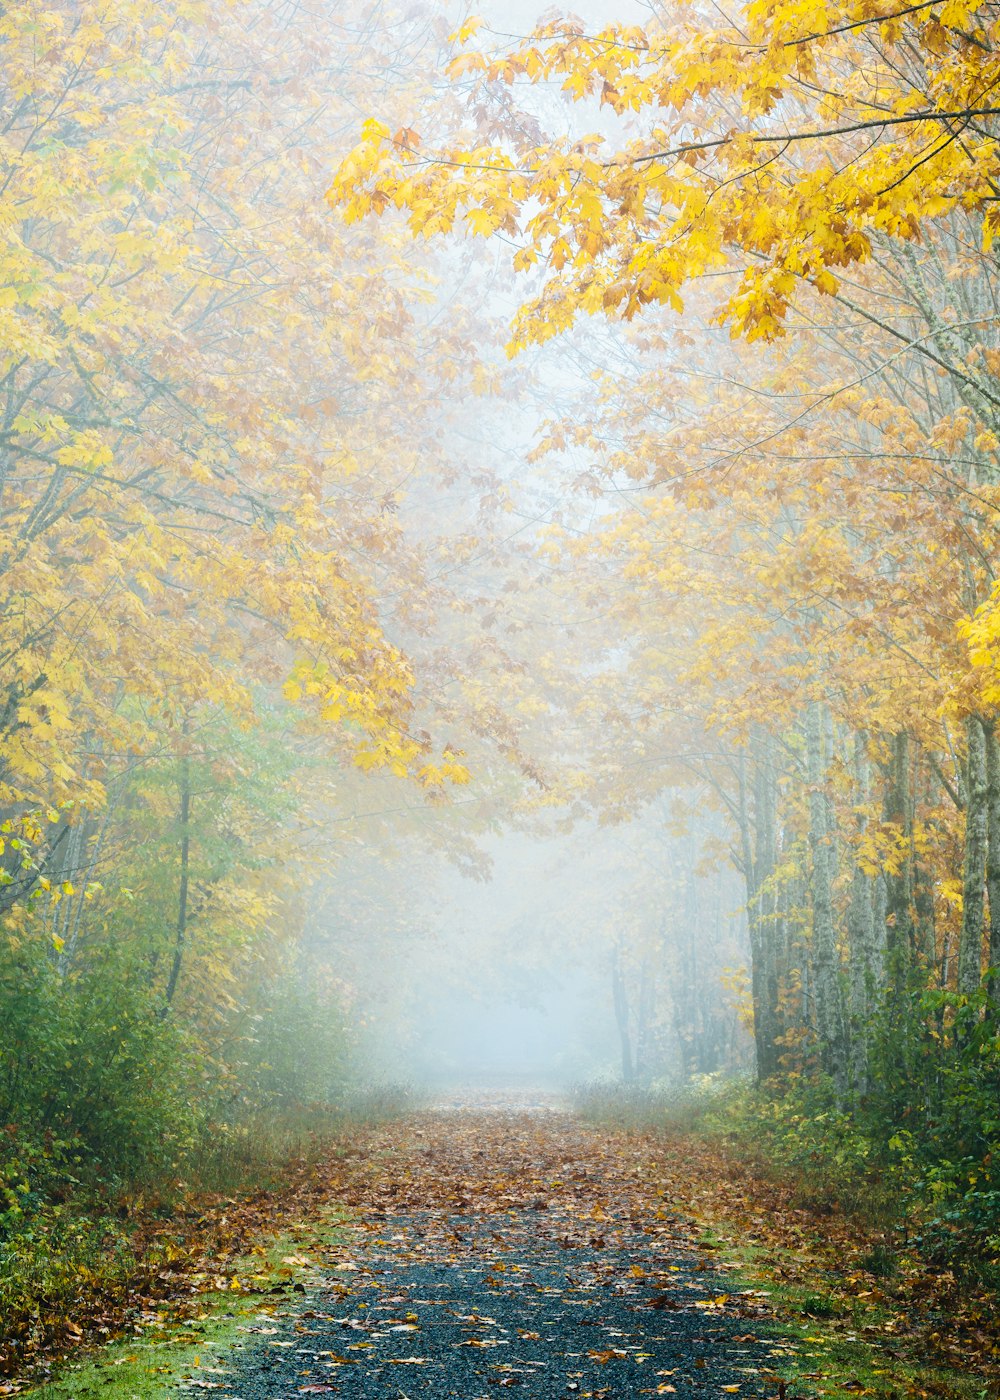 Estrada cinzenta rodeada por árvores de folhas amarelas